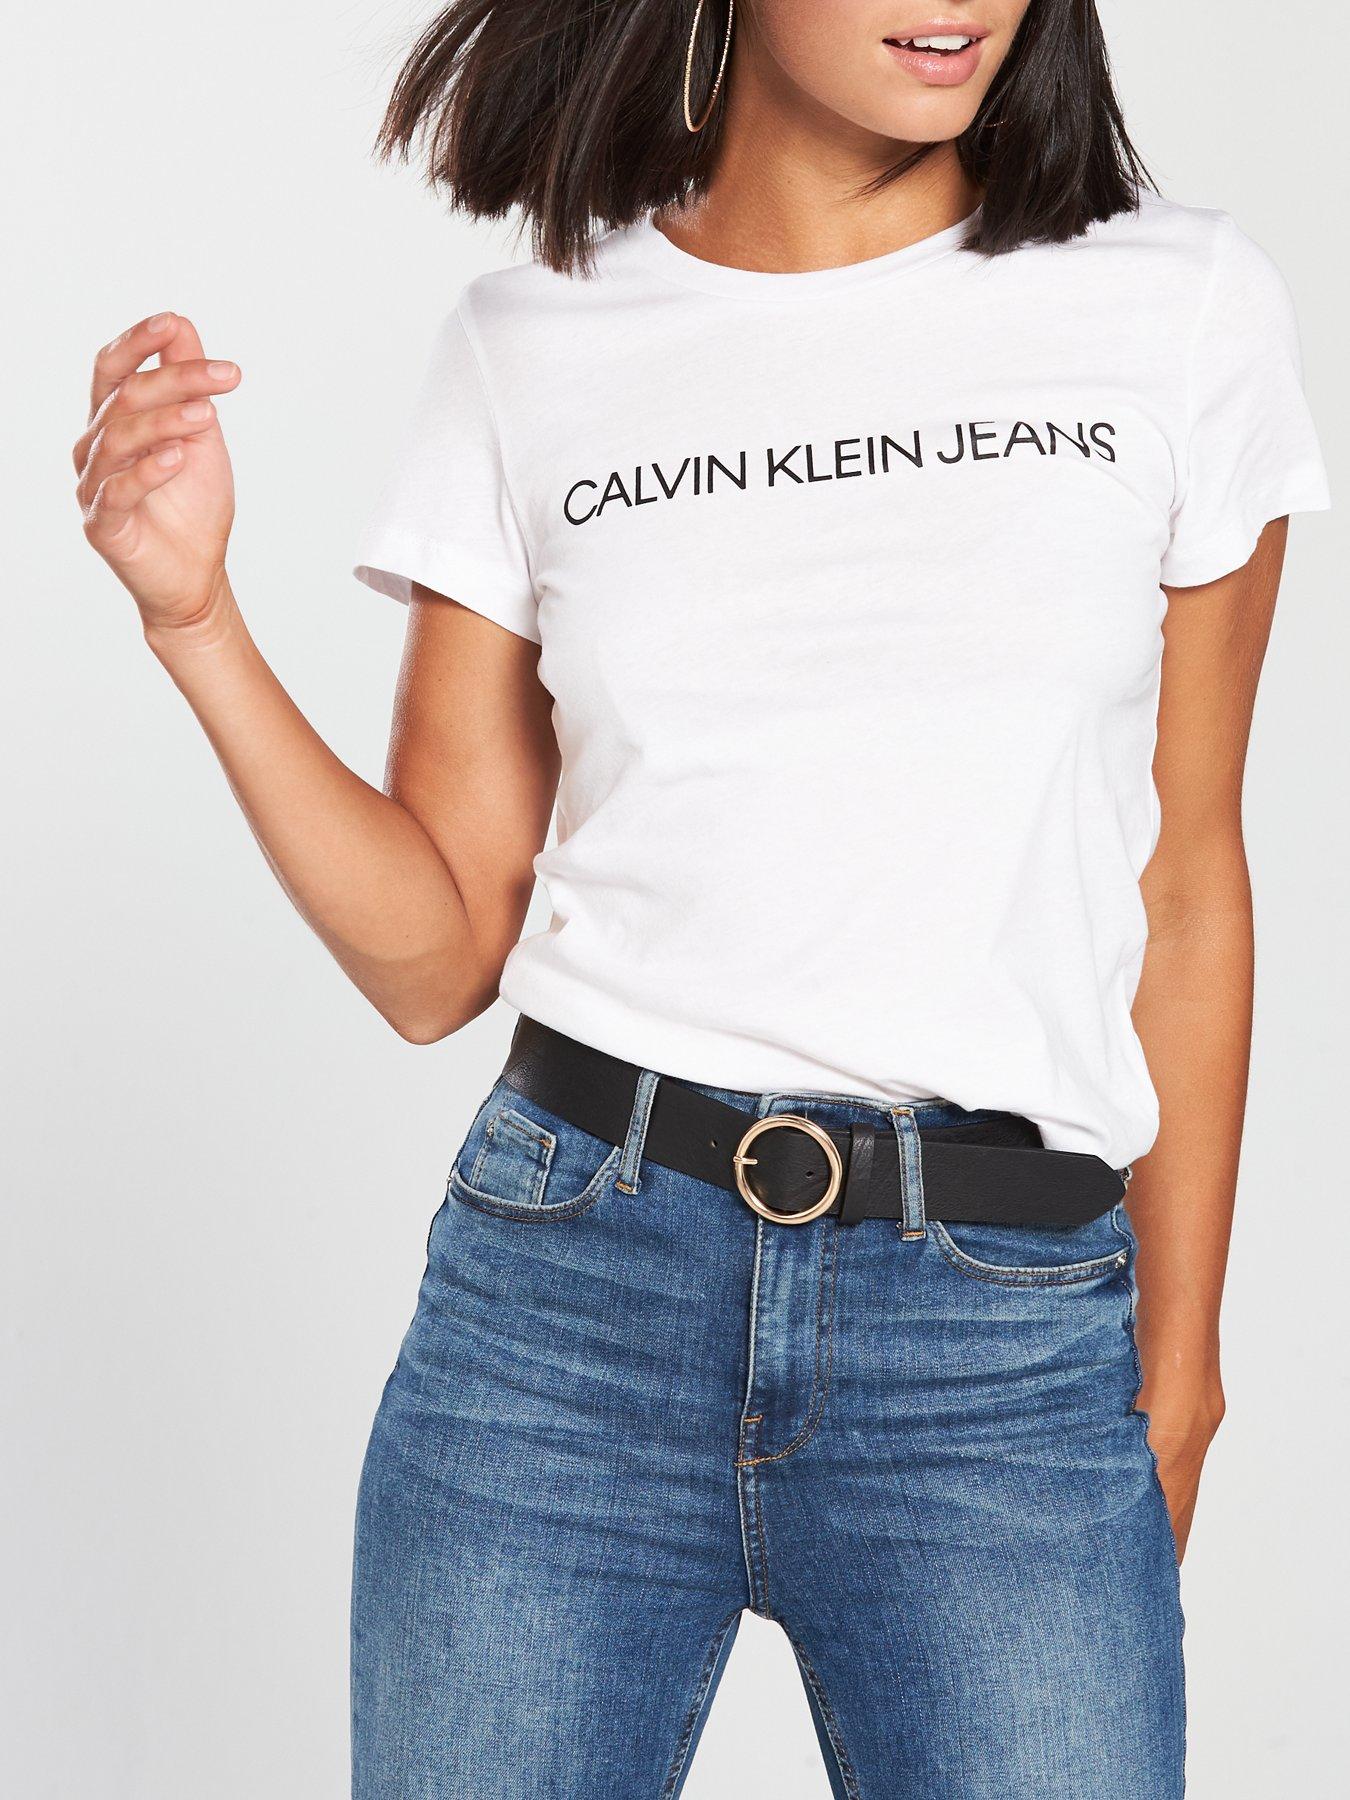 calvin klein slim fit t shirt